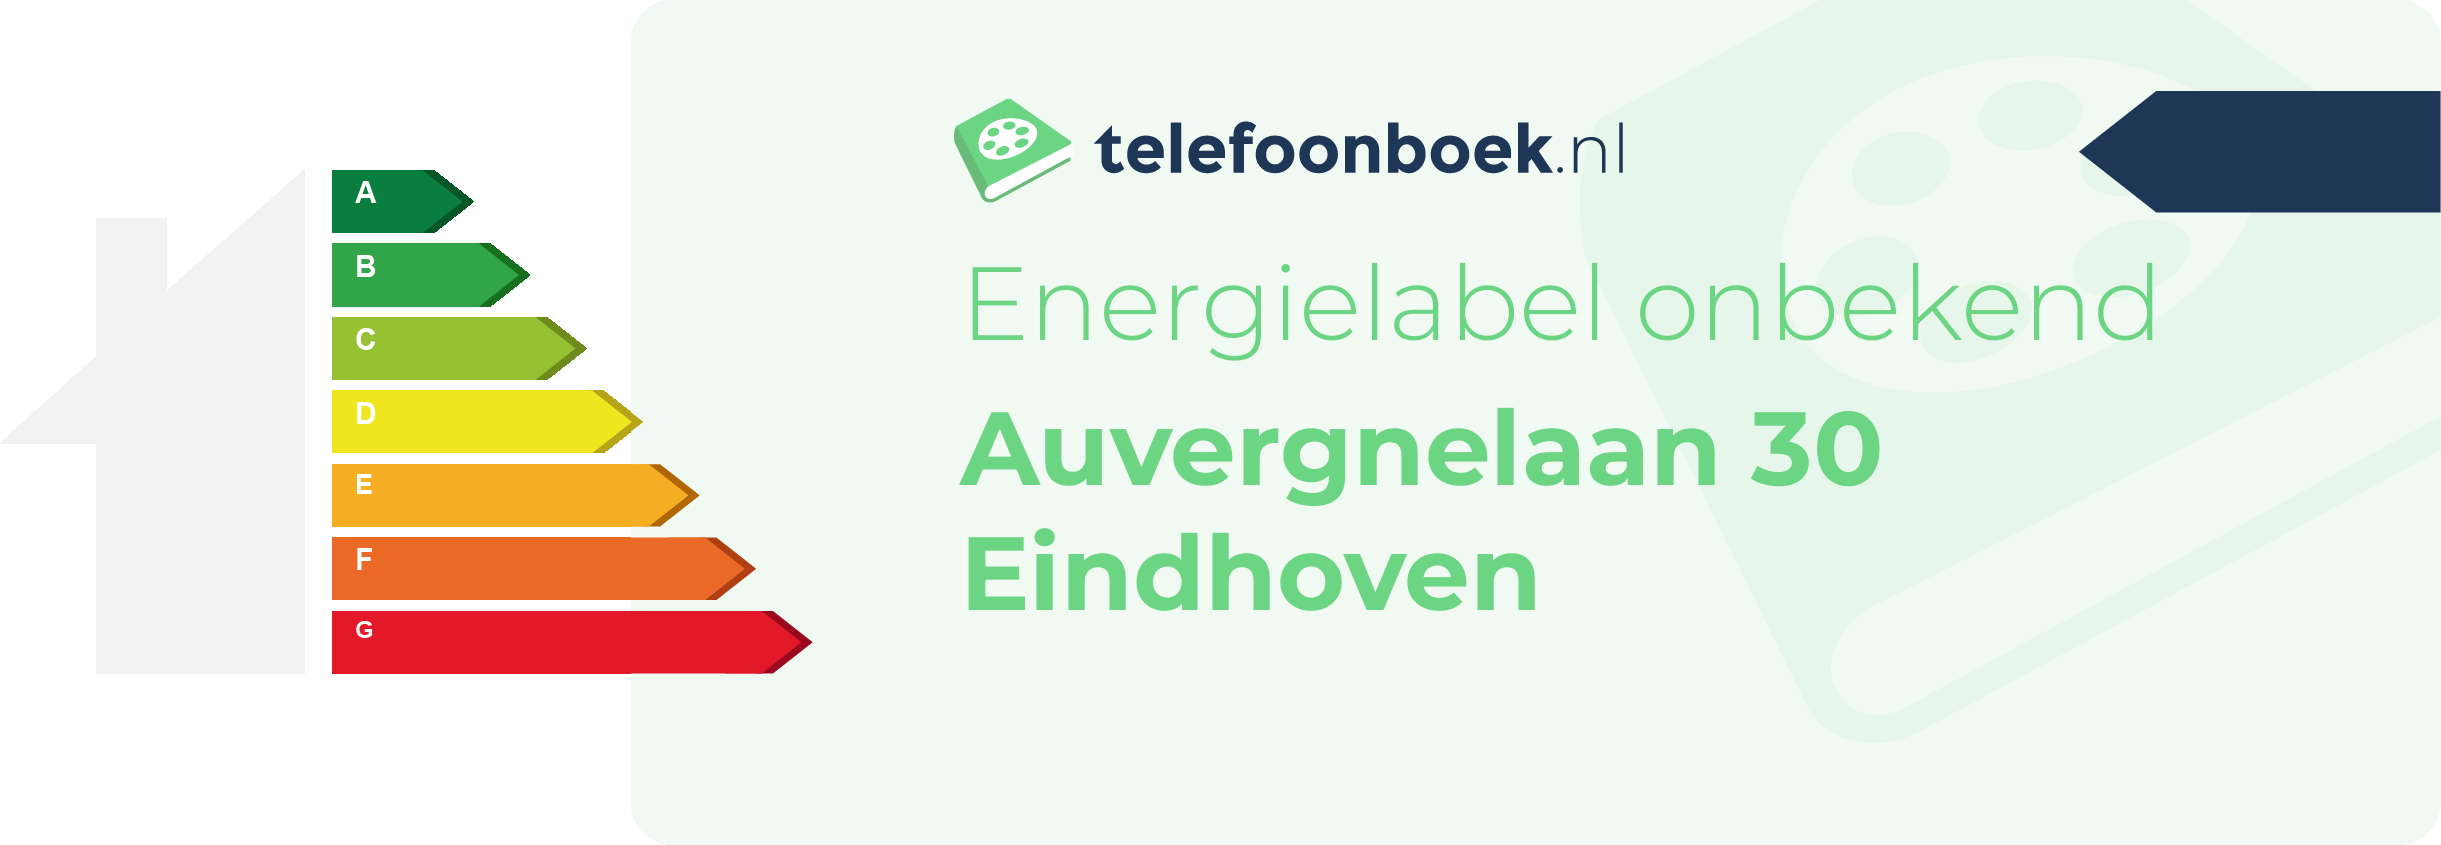 Energielabel Auvergnelaan 30 Eindhoven